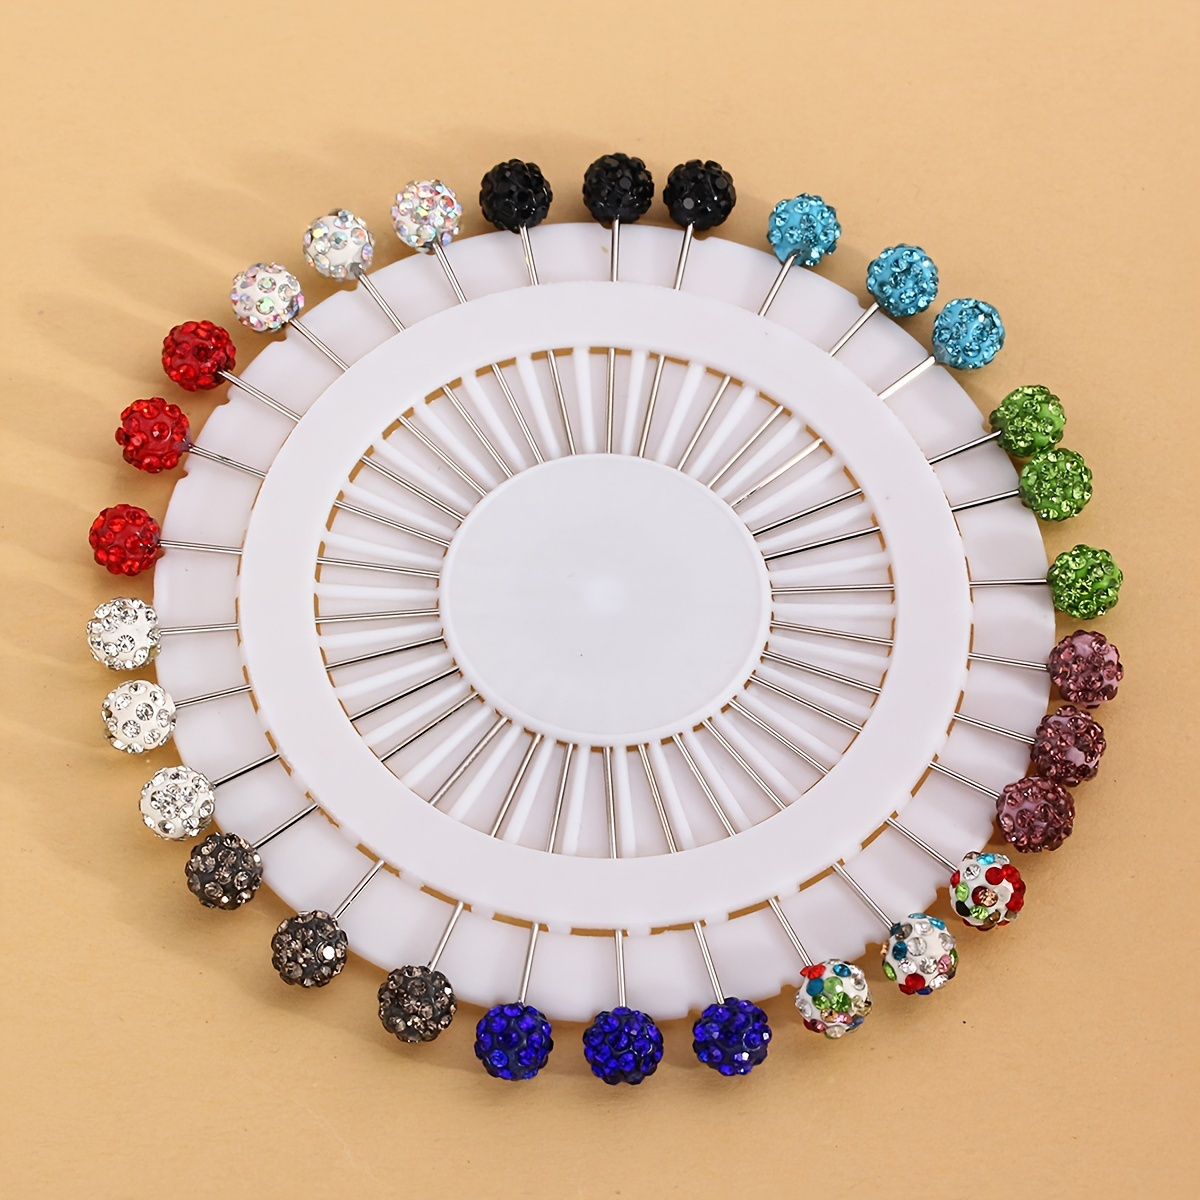  30PCS Hijab Pins with Safety Caps Colorful Crystal Rhinestone  Muslim Hijab Scarf Pins Hijab Pins Wedding Pins